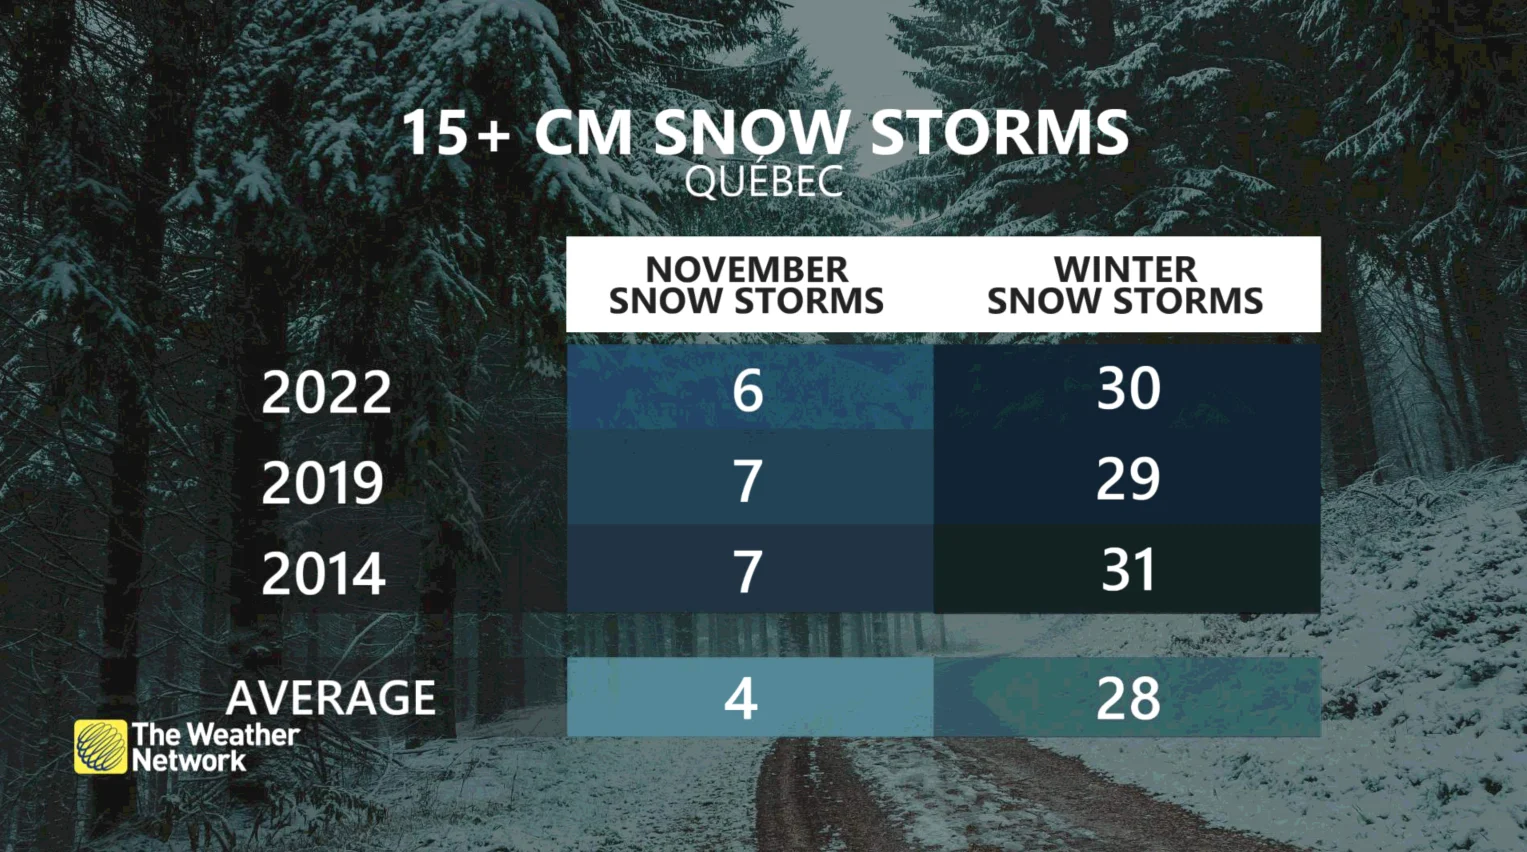 Quebec November snow storms vs winter snow storms